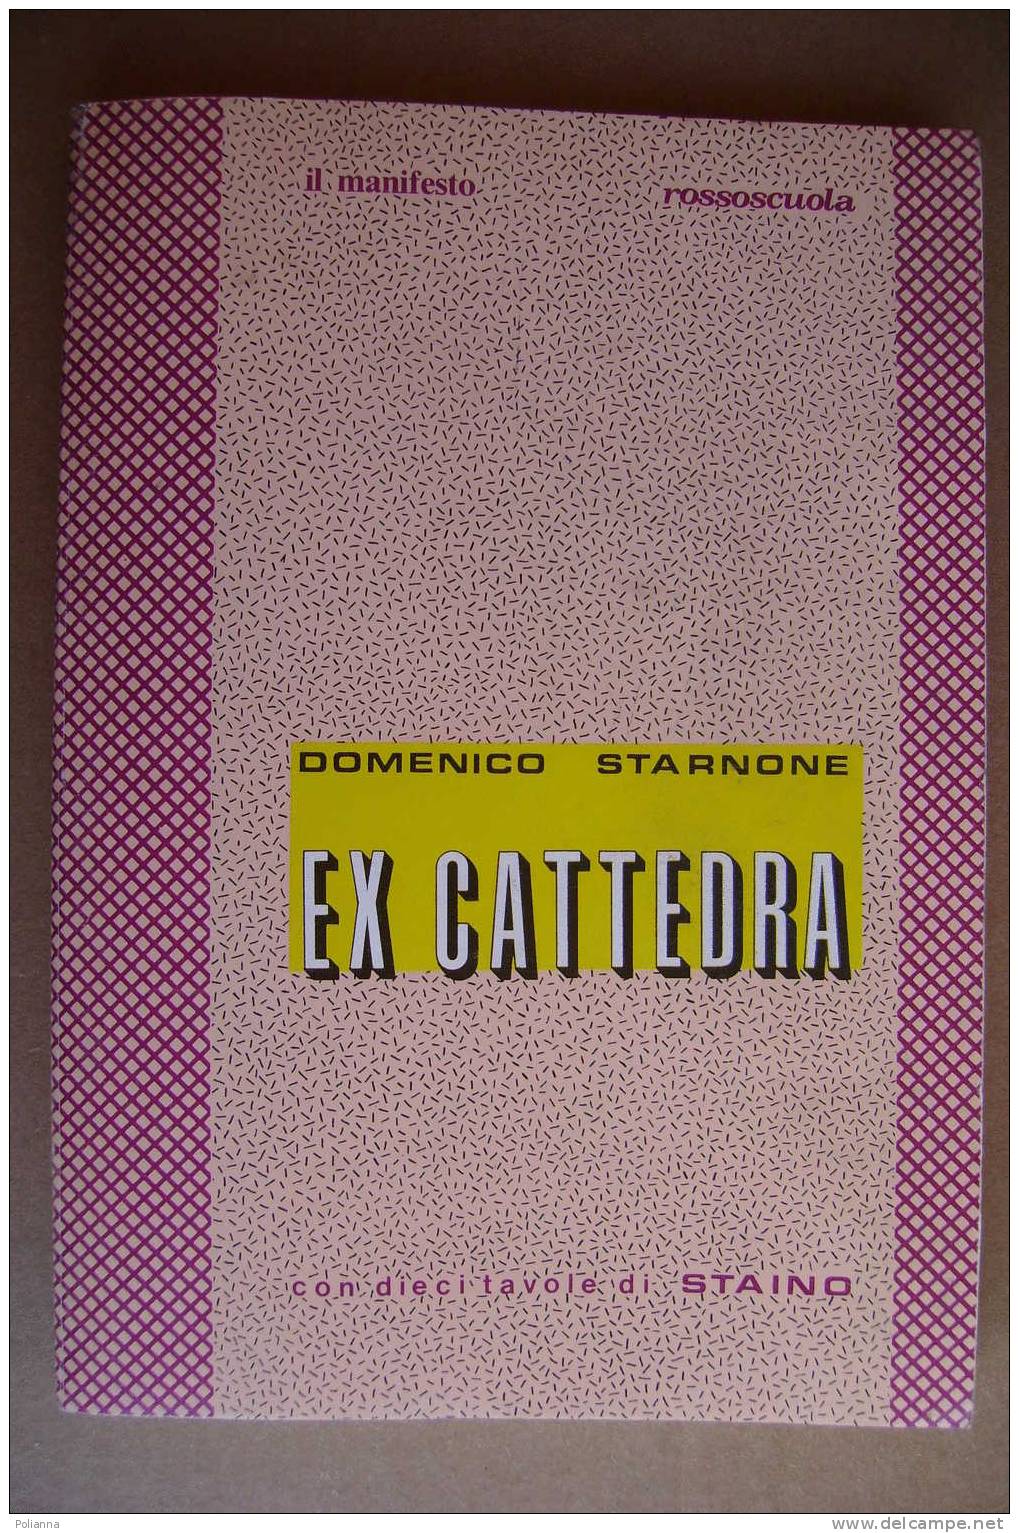 PAO/59 Starnone EX CATTEDRA Il Manifesto - Suppl. A Rossoscuola N.38/10 Tav. STAINO - Society, Politics & Economy